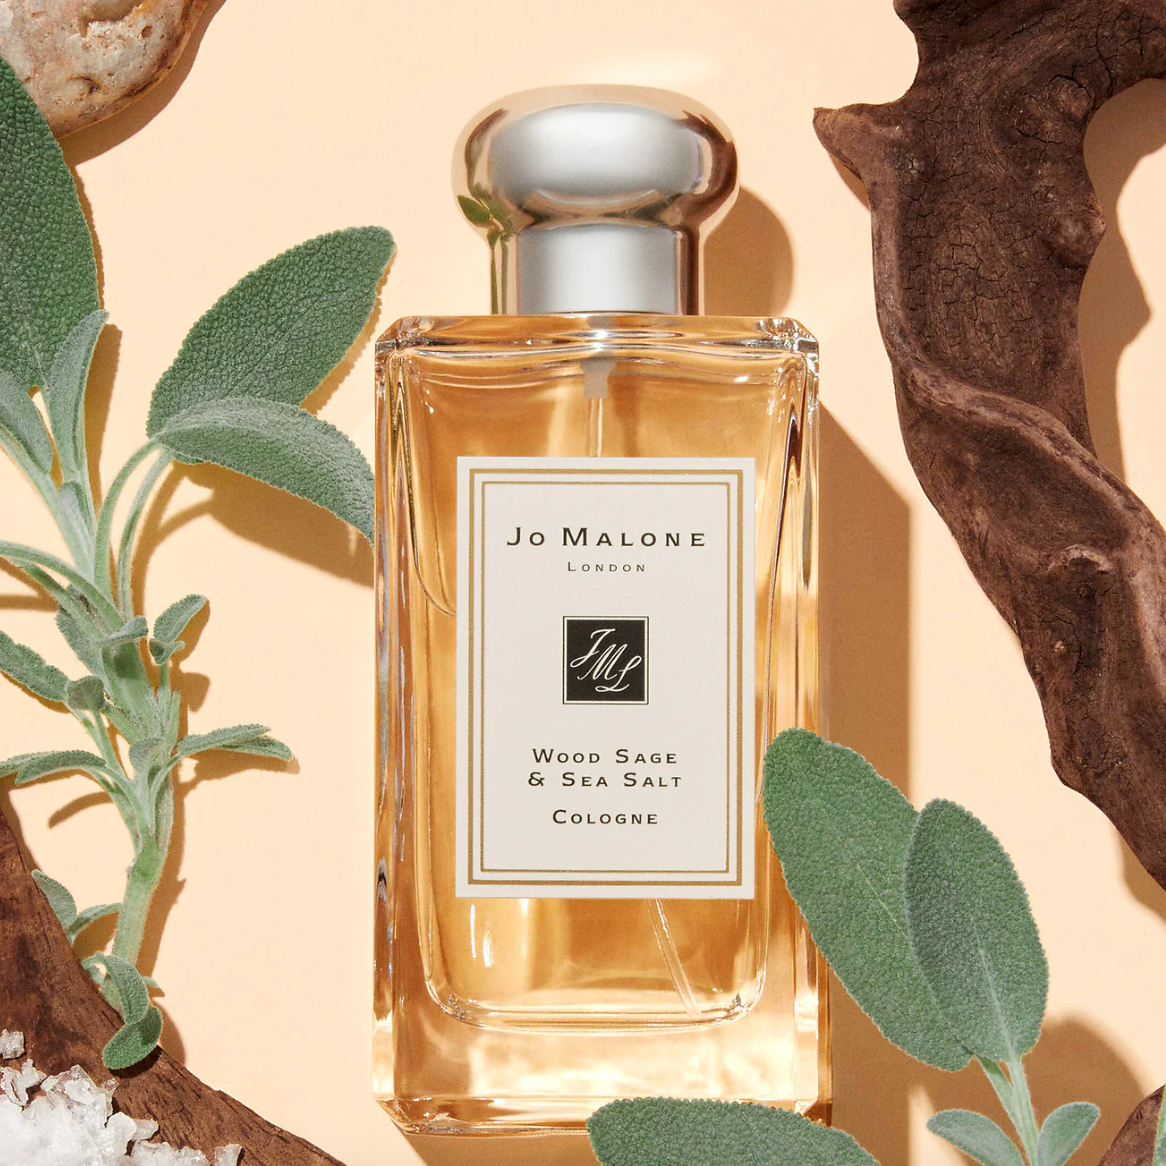 Exotic Mimosa Zara perfume - a new fragrance for women 2022